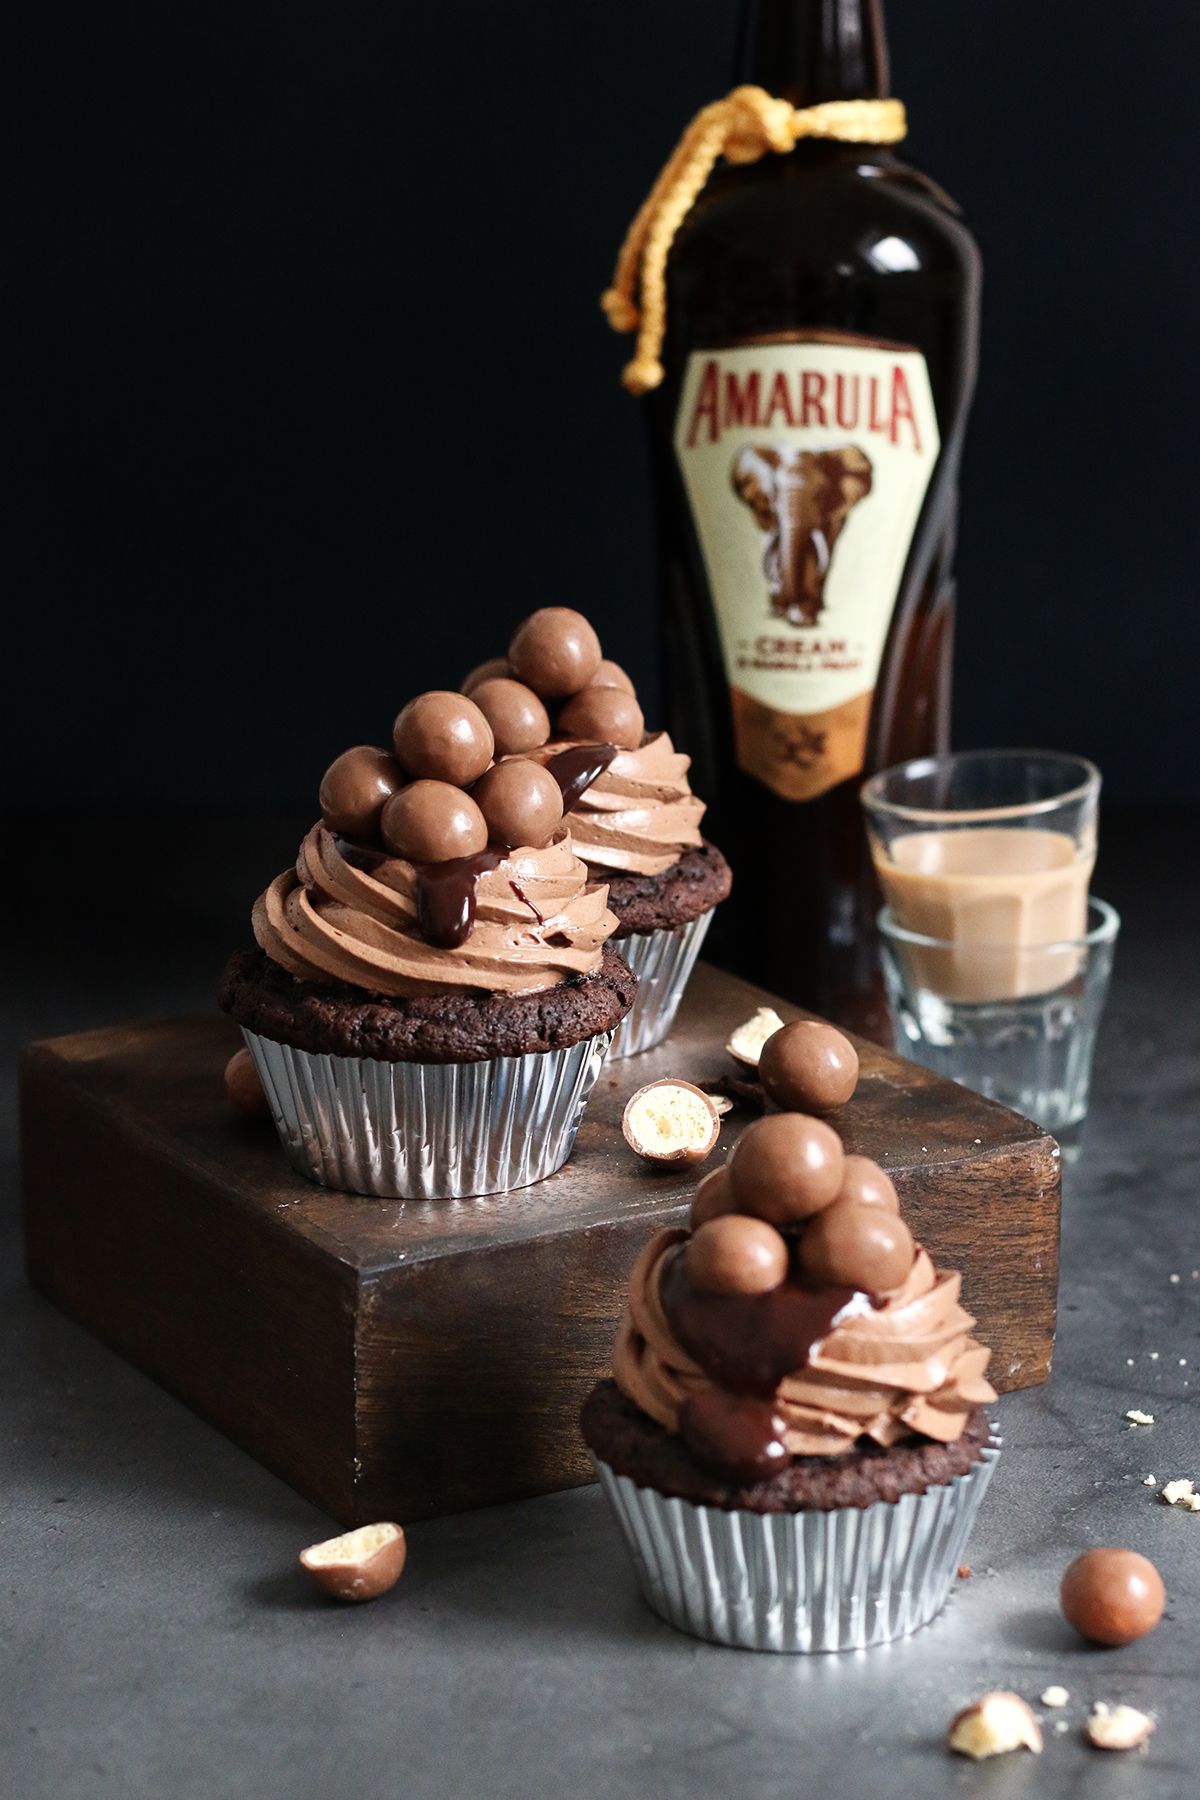 Amarula Chocolate Cupcakes